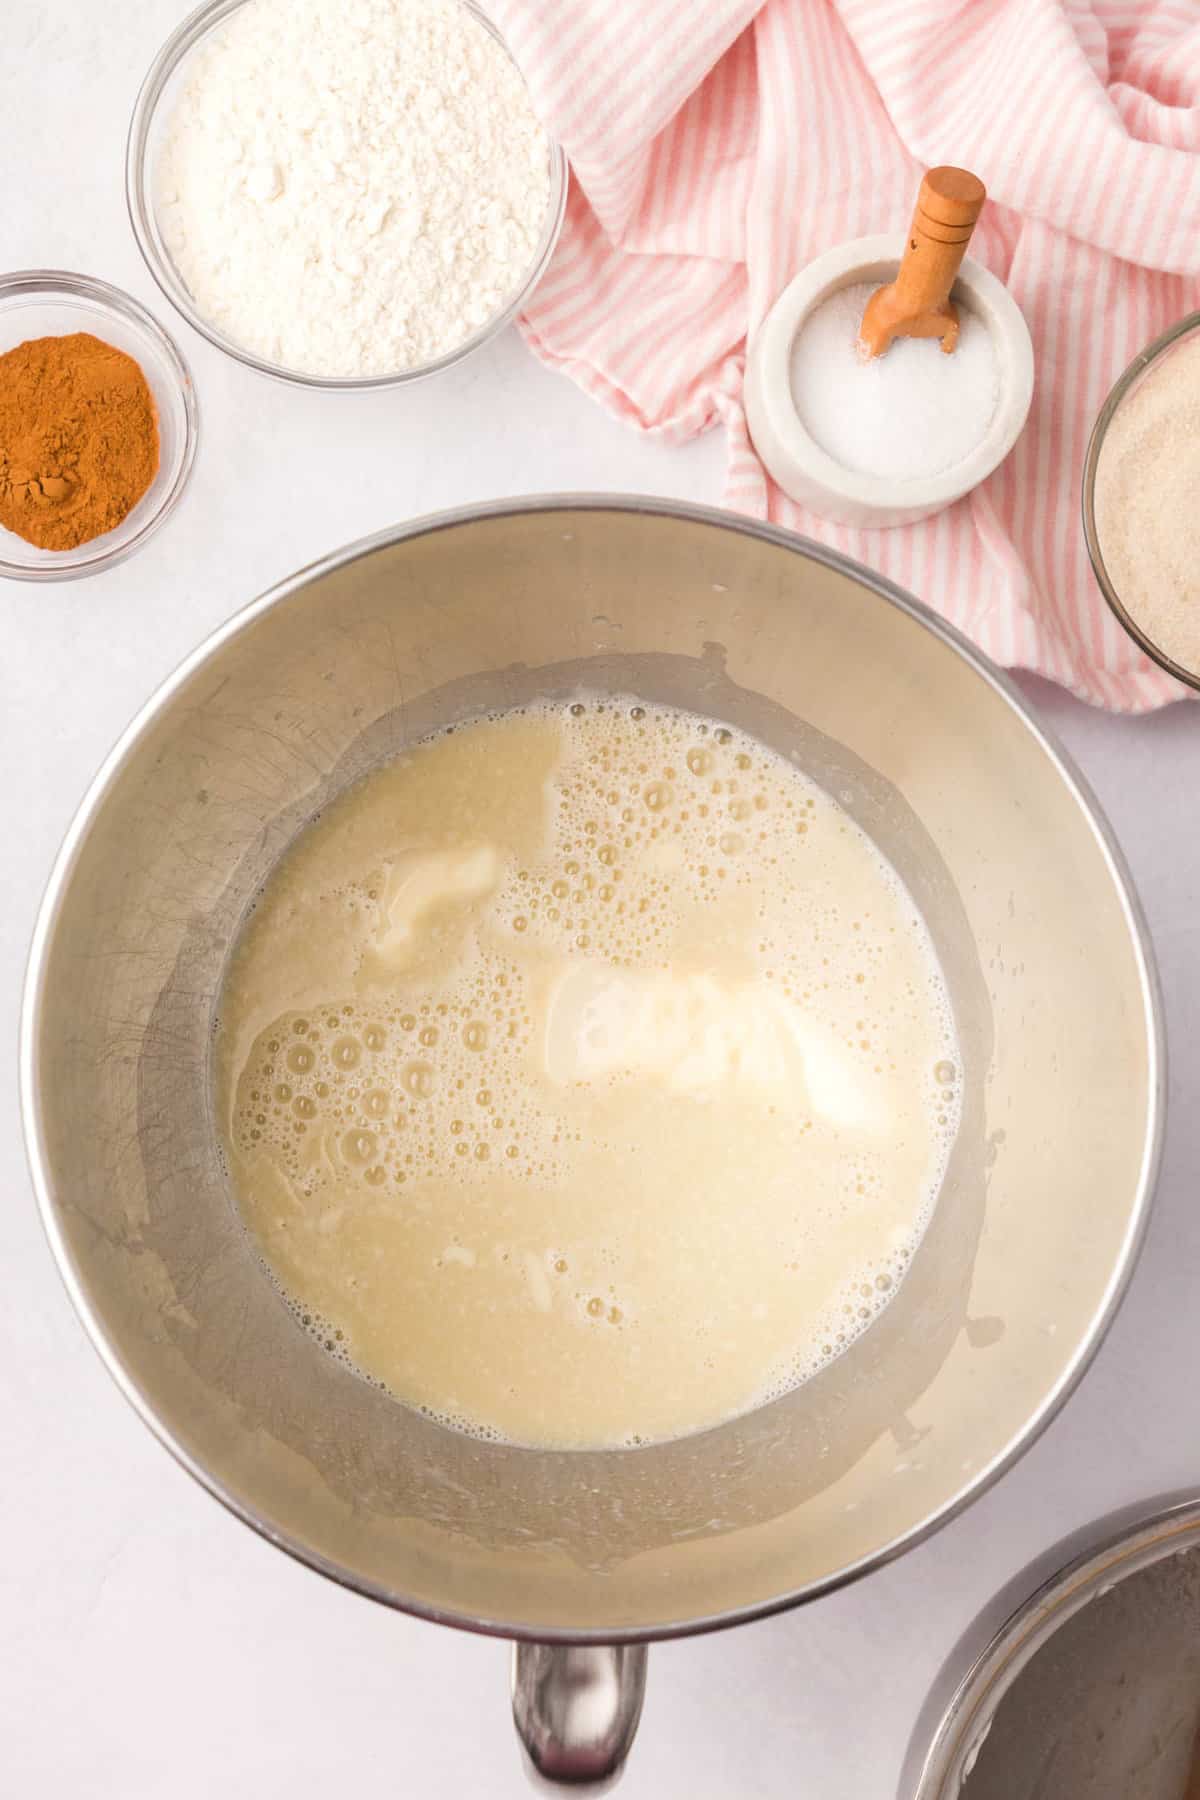 Combining warm yeast and milk mixtures for Cinnamon Swirl Bread recipe in bowl